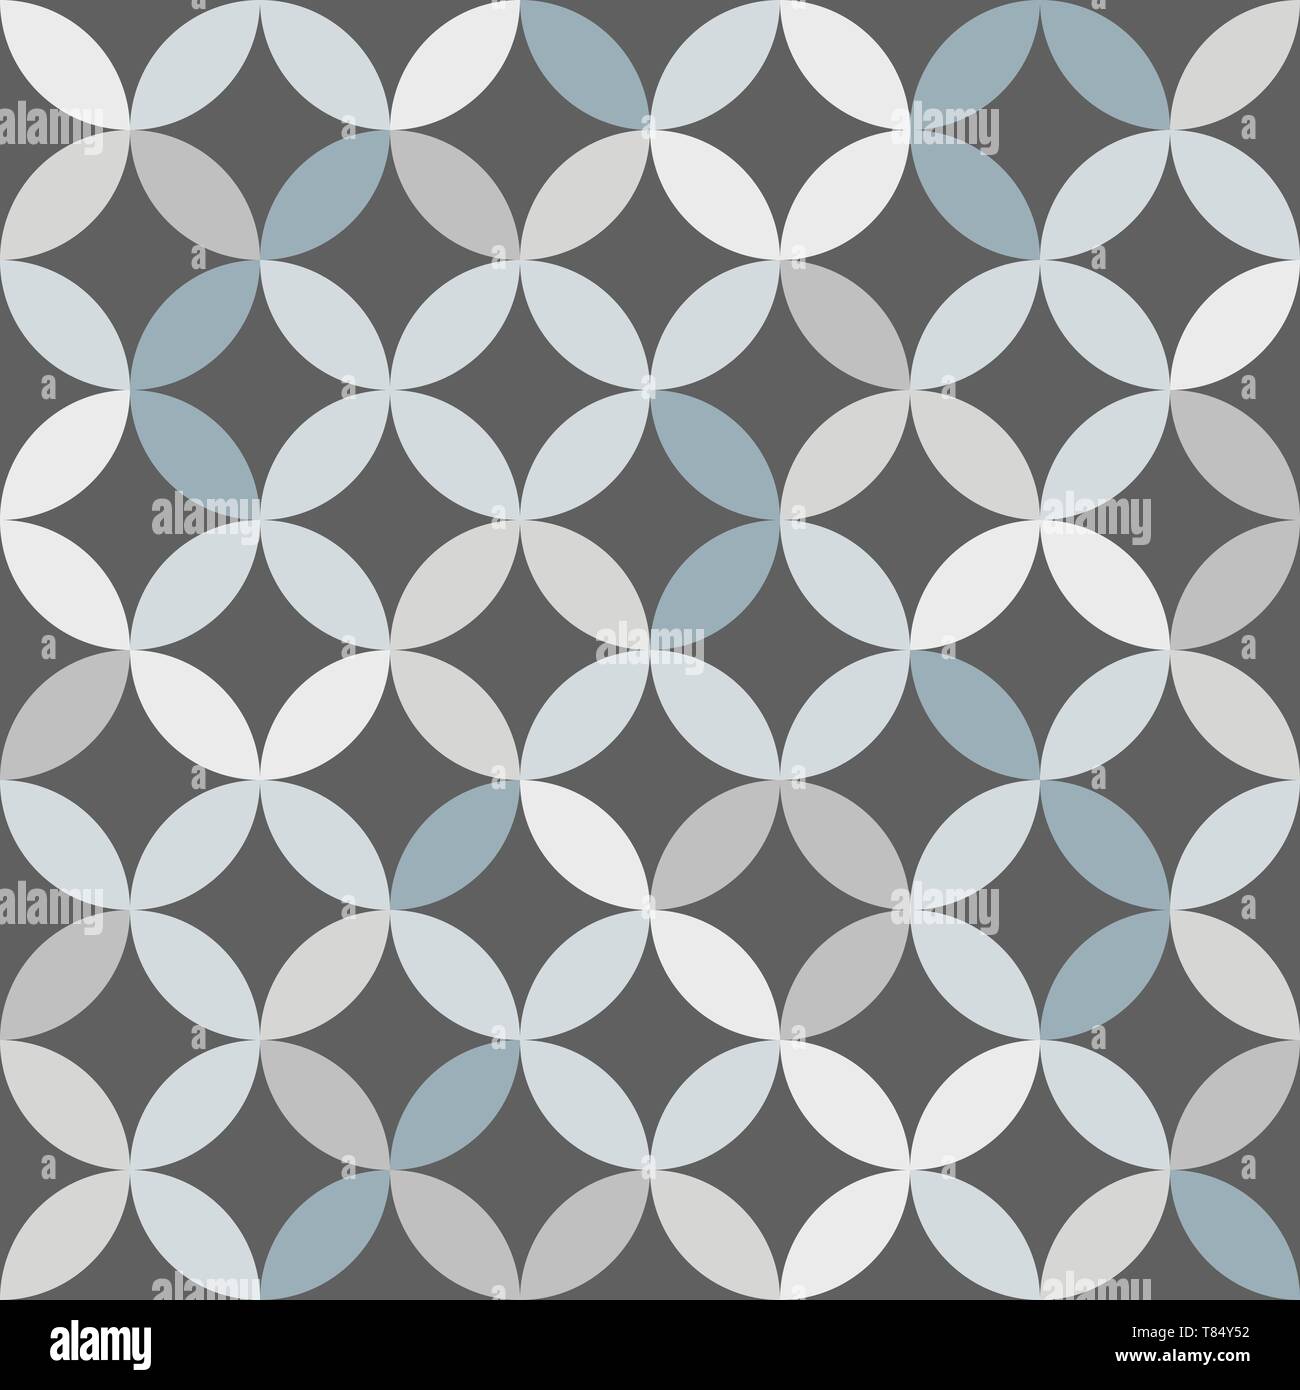 1960s fashion design pattern - seamless texture vector illustration. Stock Vector